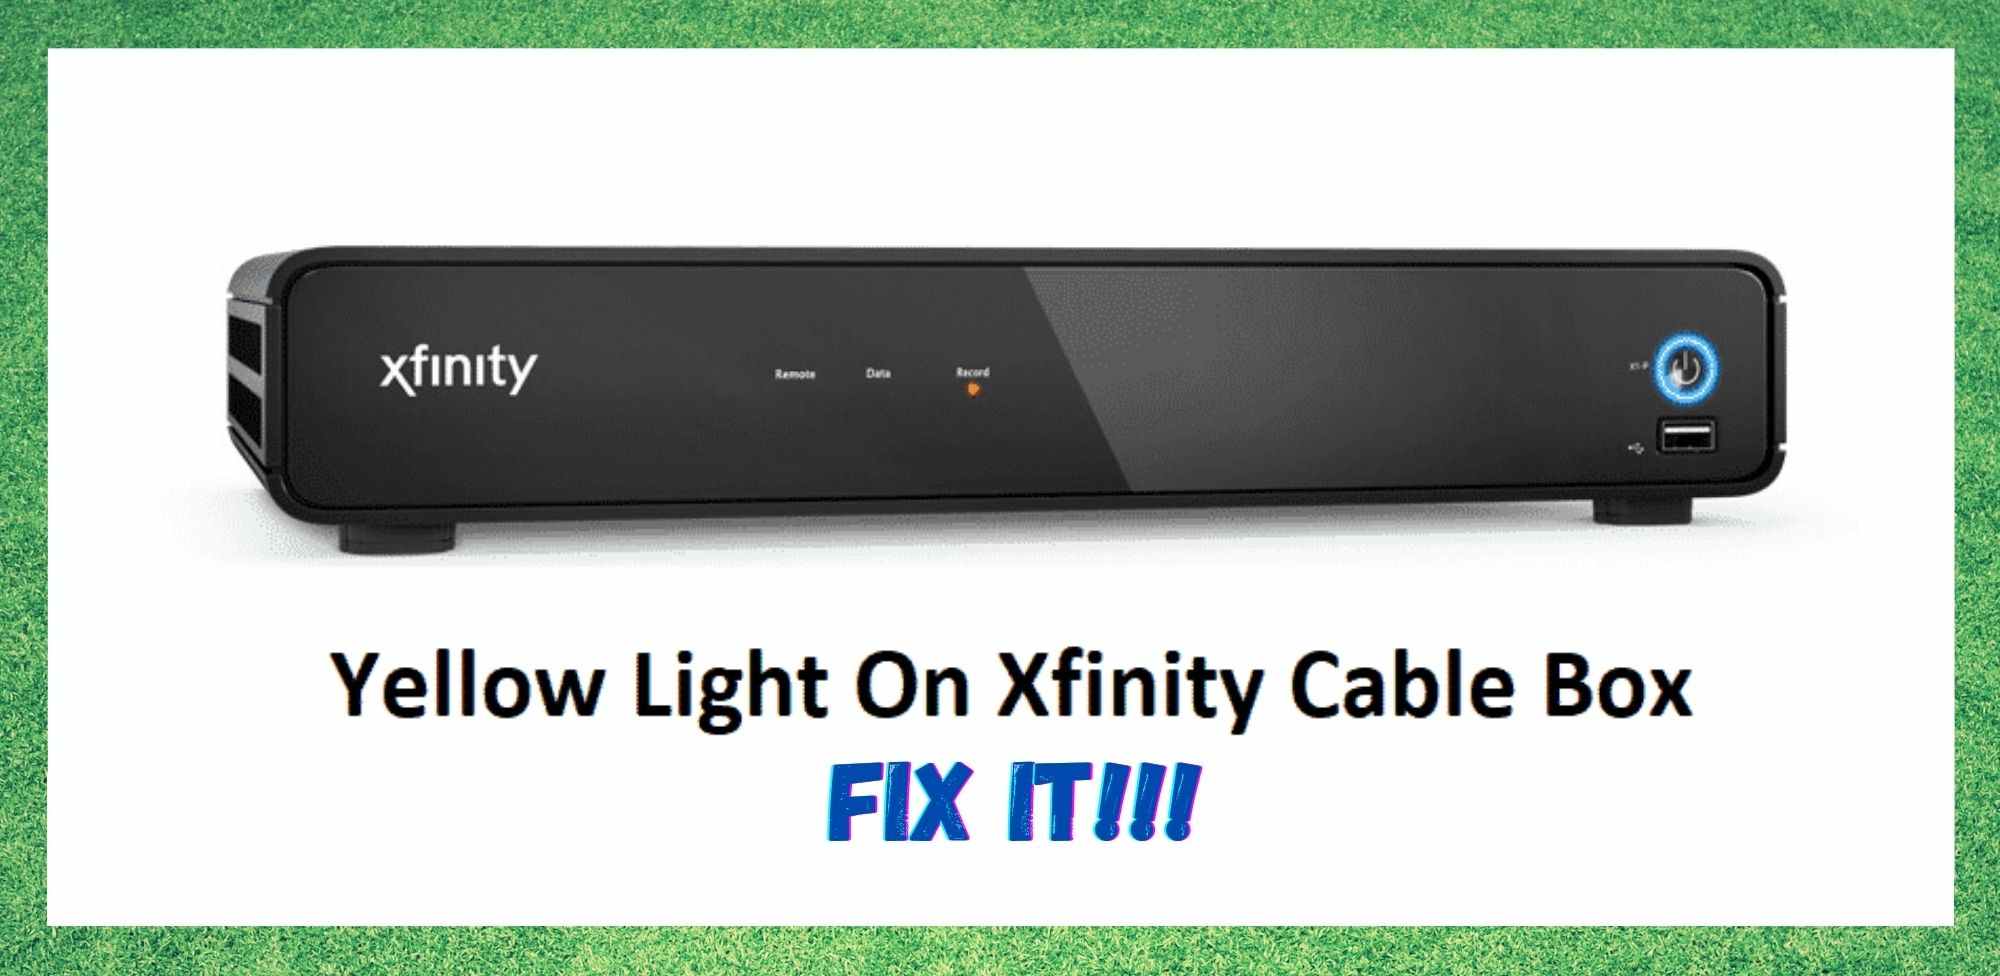 Xfinity کیبل باکس پر پیلی روشنی کو ٹھیک کرنے کے 5 طریقے